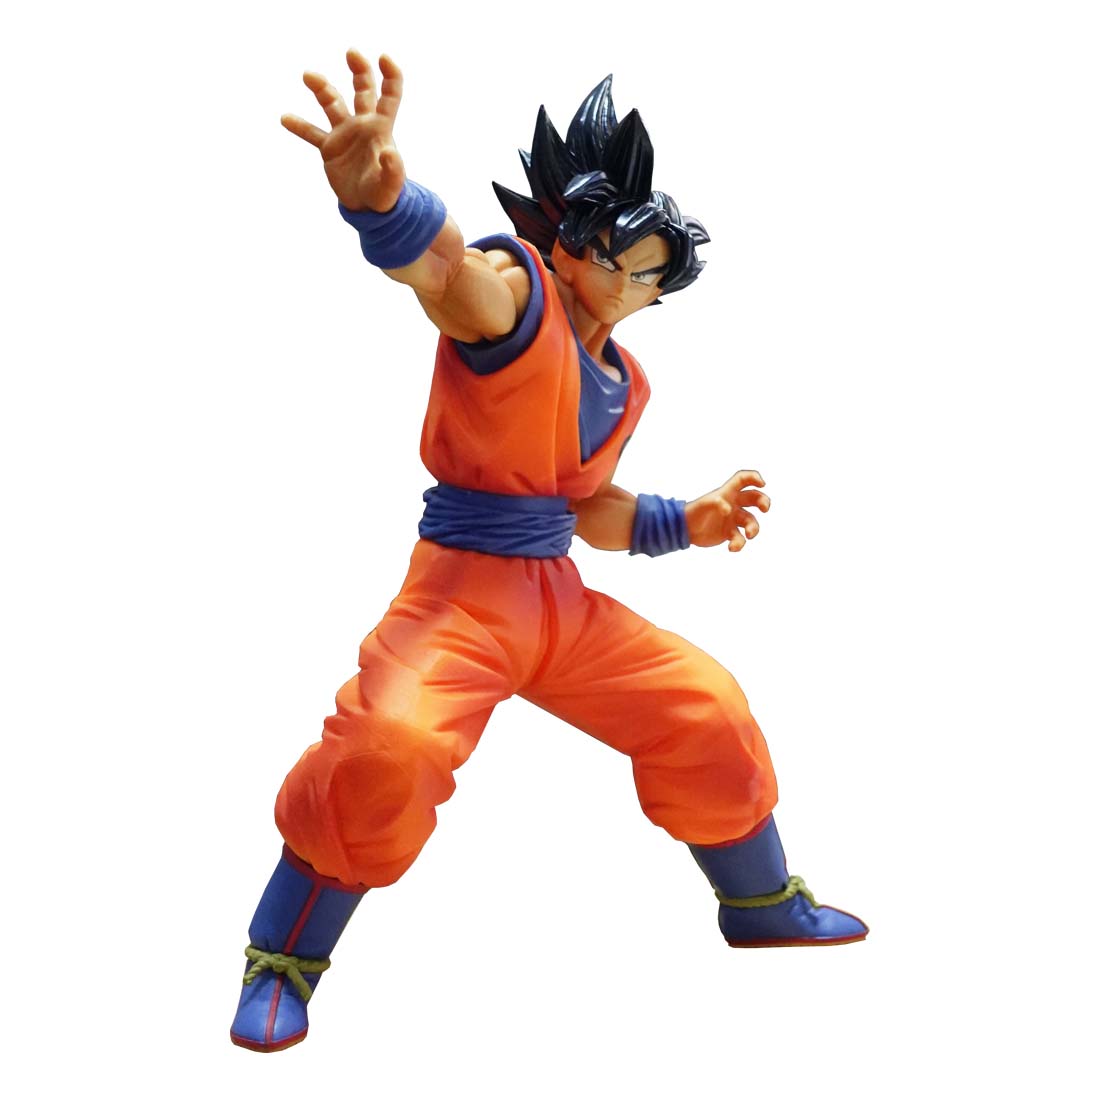 Dragon Ball Z - Maximatic: The Son Goku VI - مجسم - Store 974 | ستور ٩٧٤